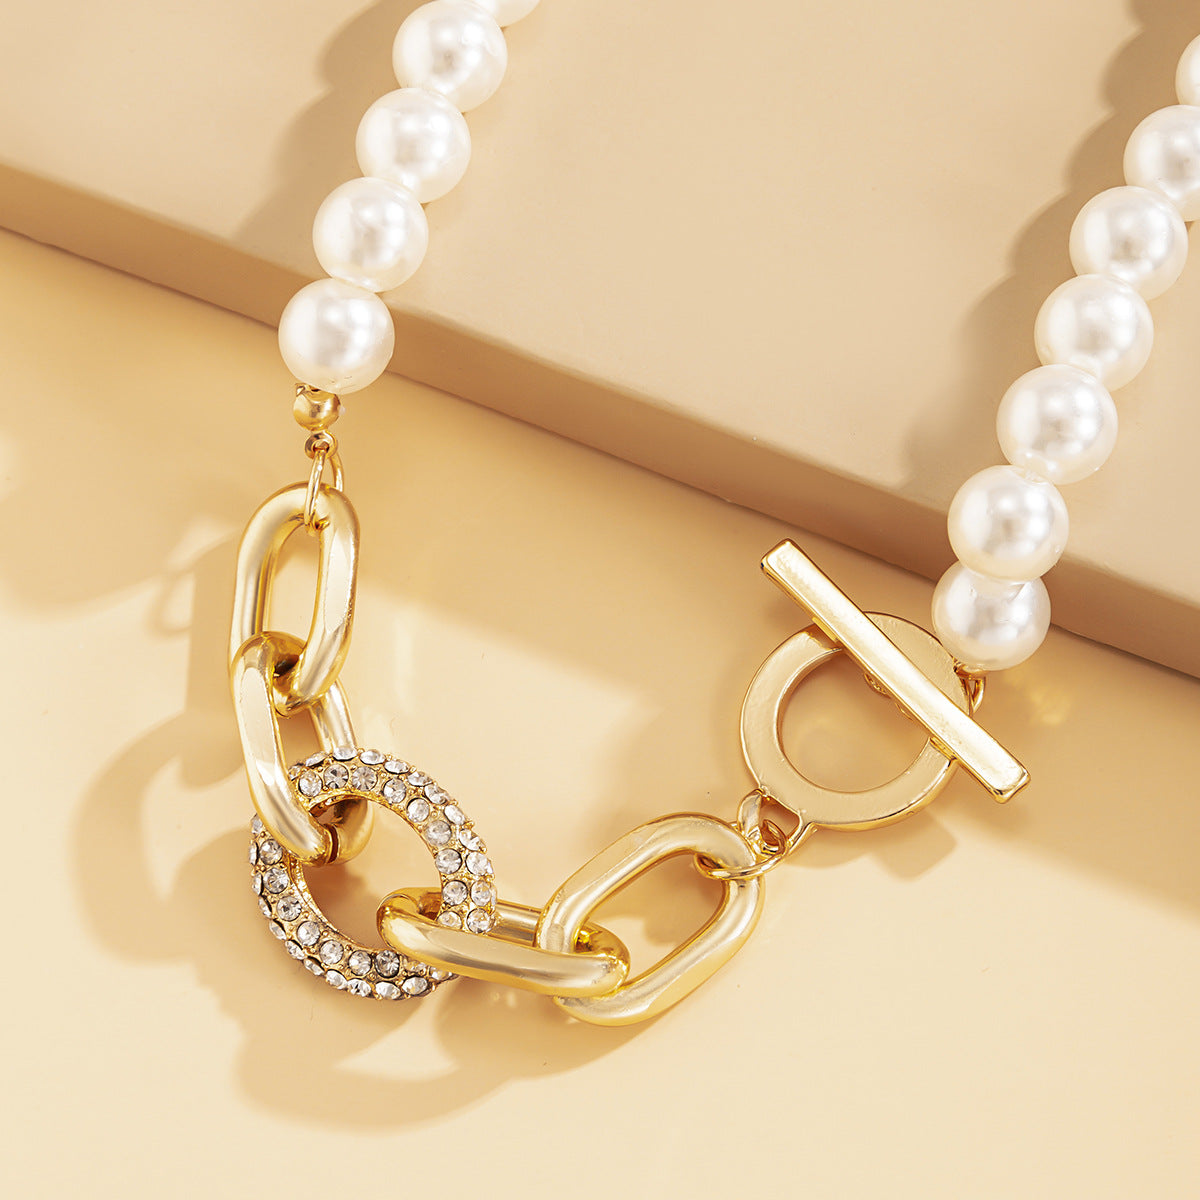 N11513 Charm Rhinestone Pearls T Clasp Chain Necklace